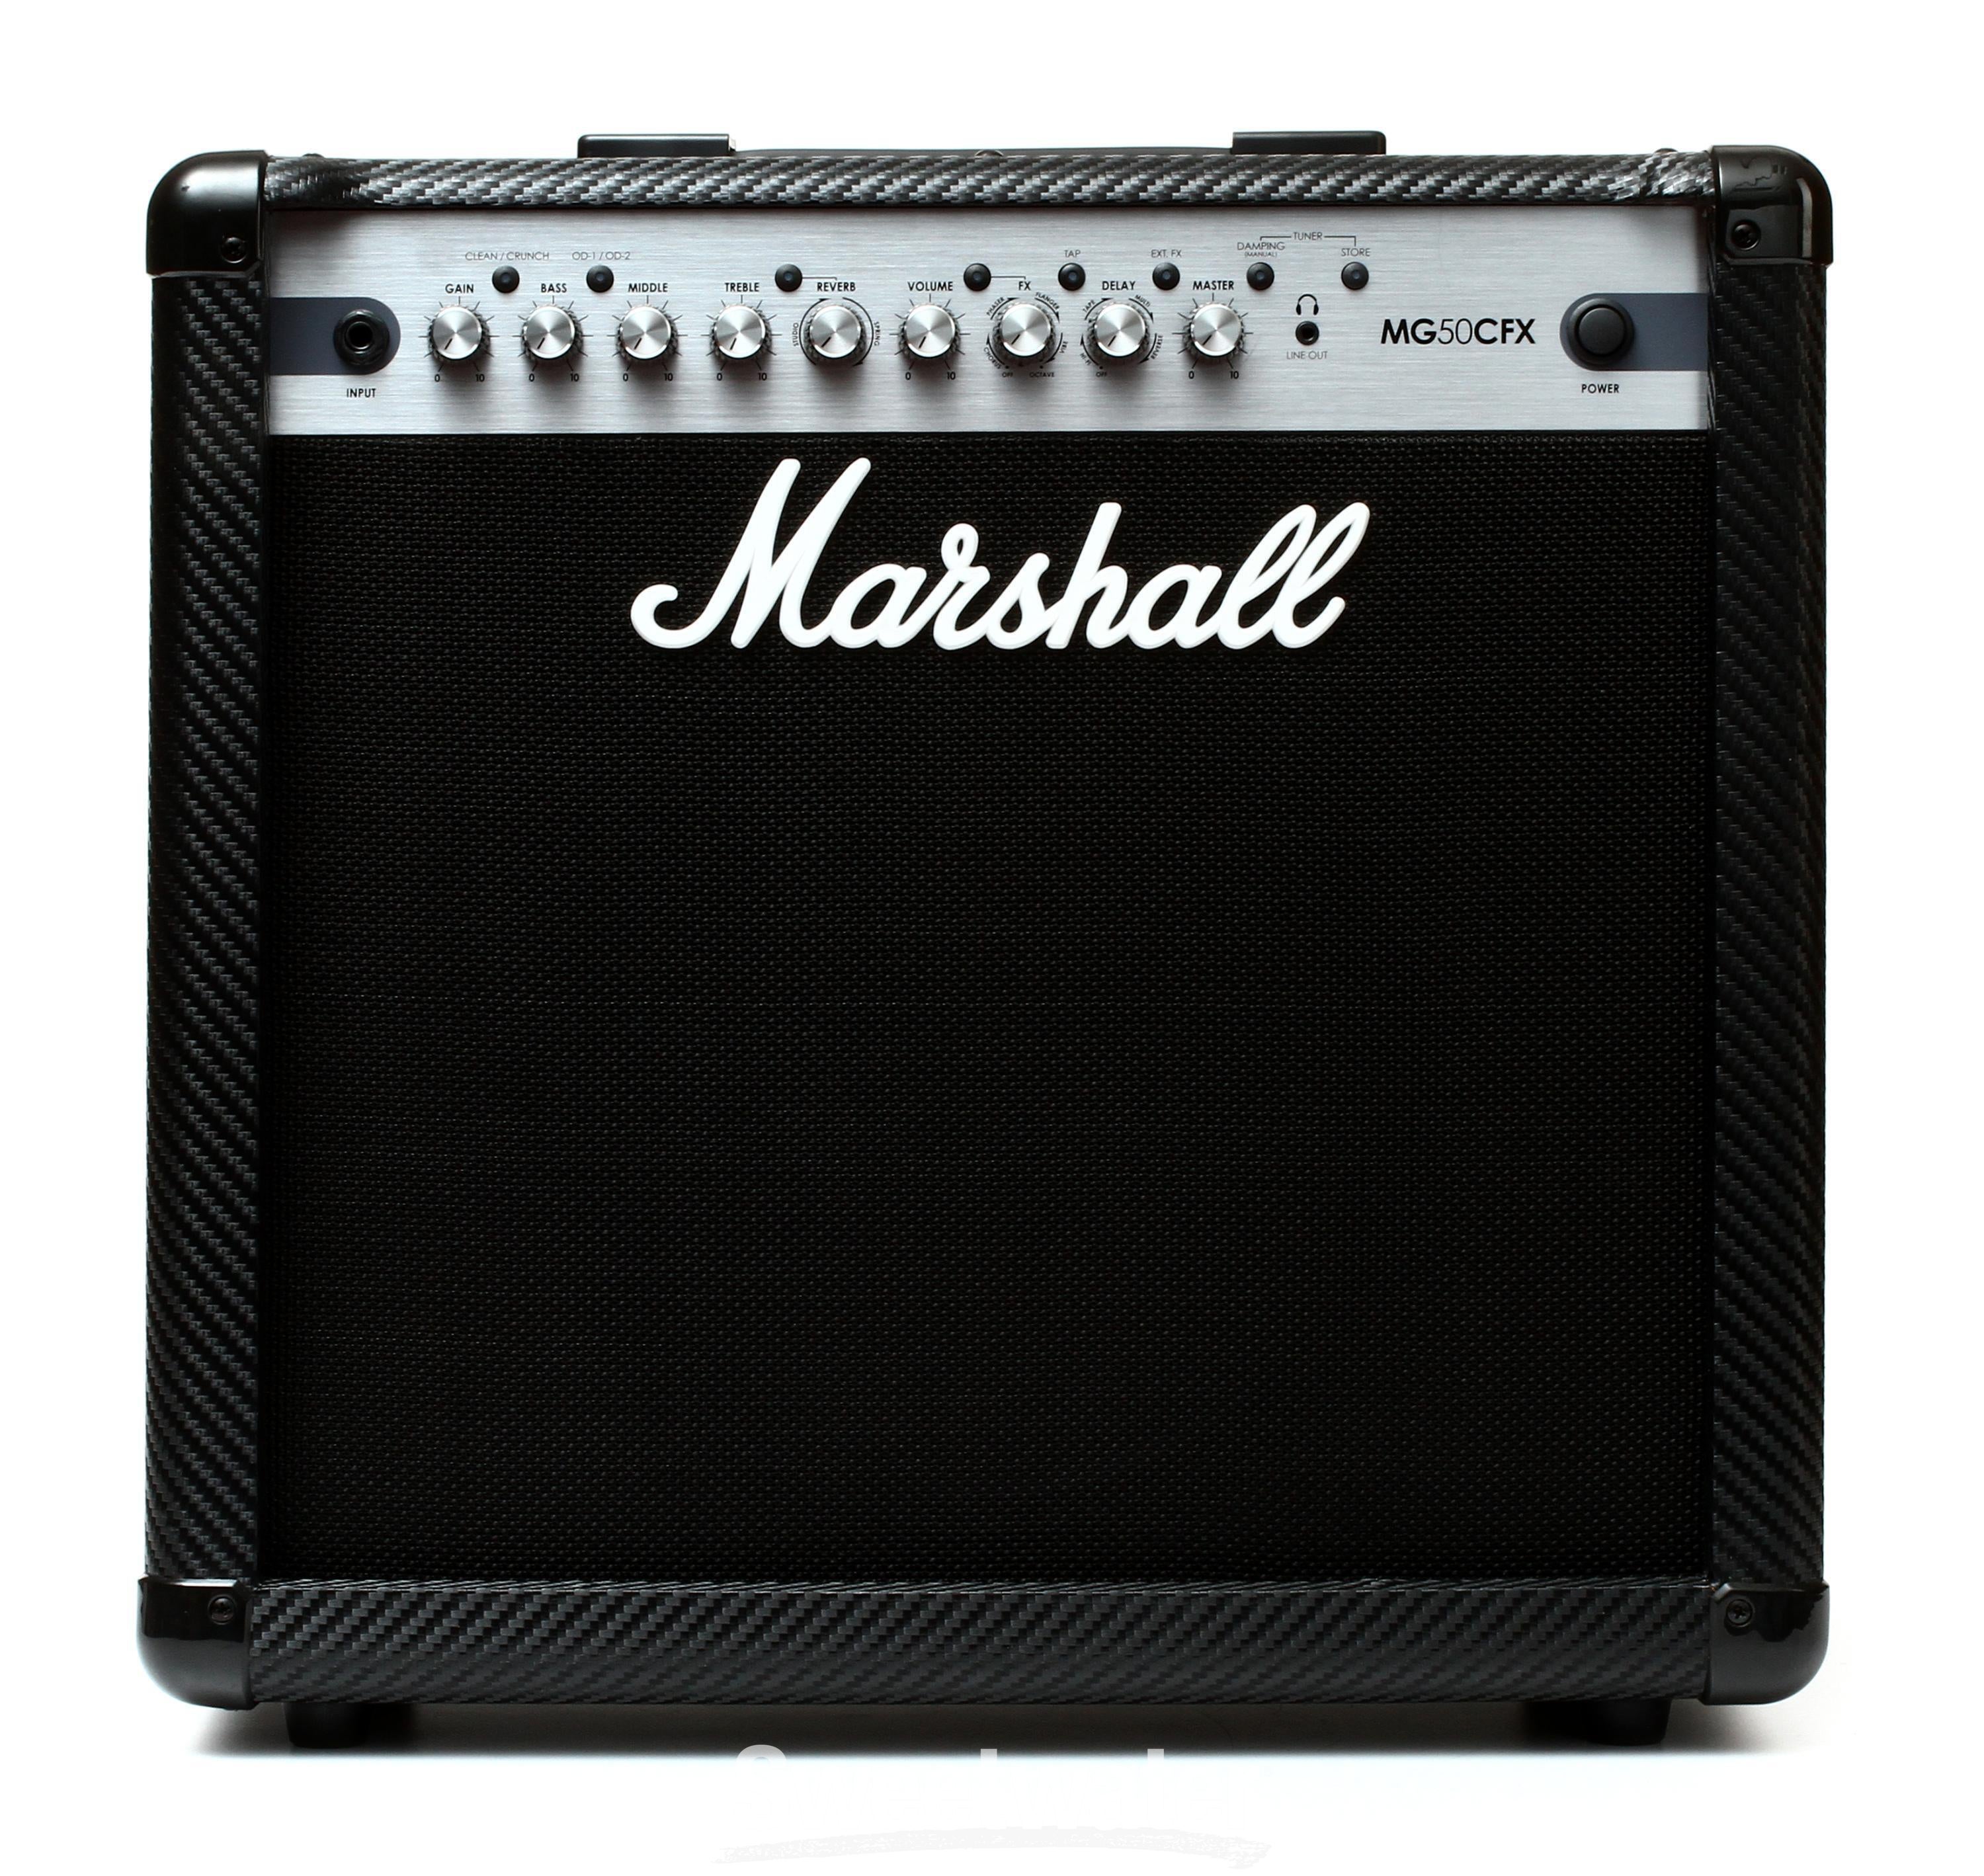 Marshall MG50CFX 50-watt 1x12